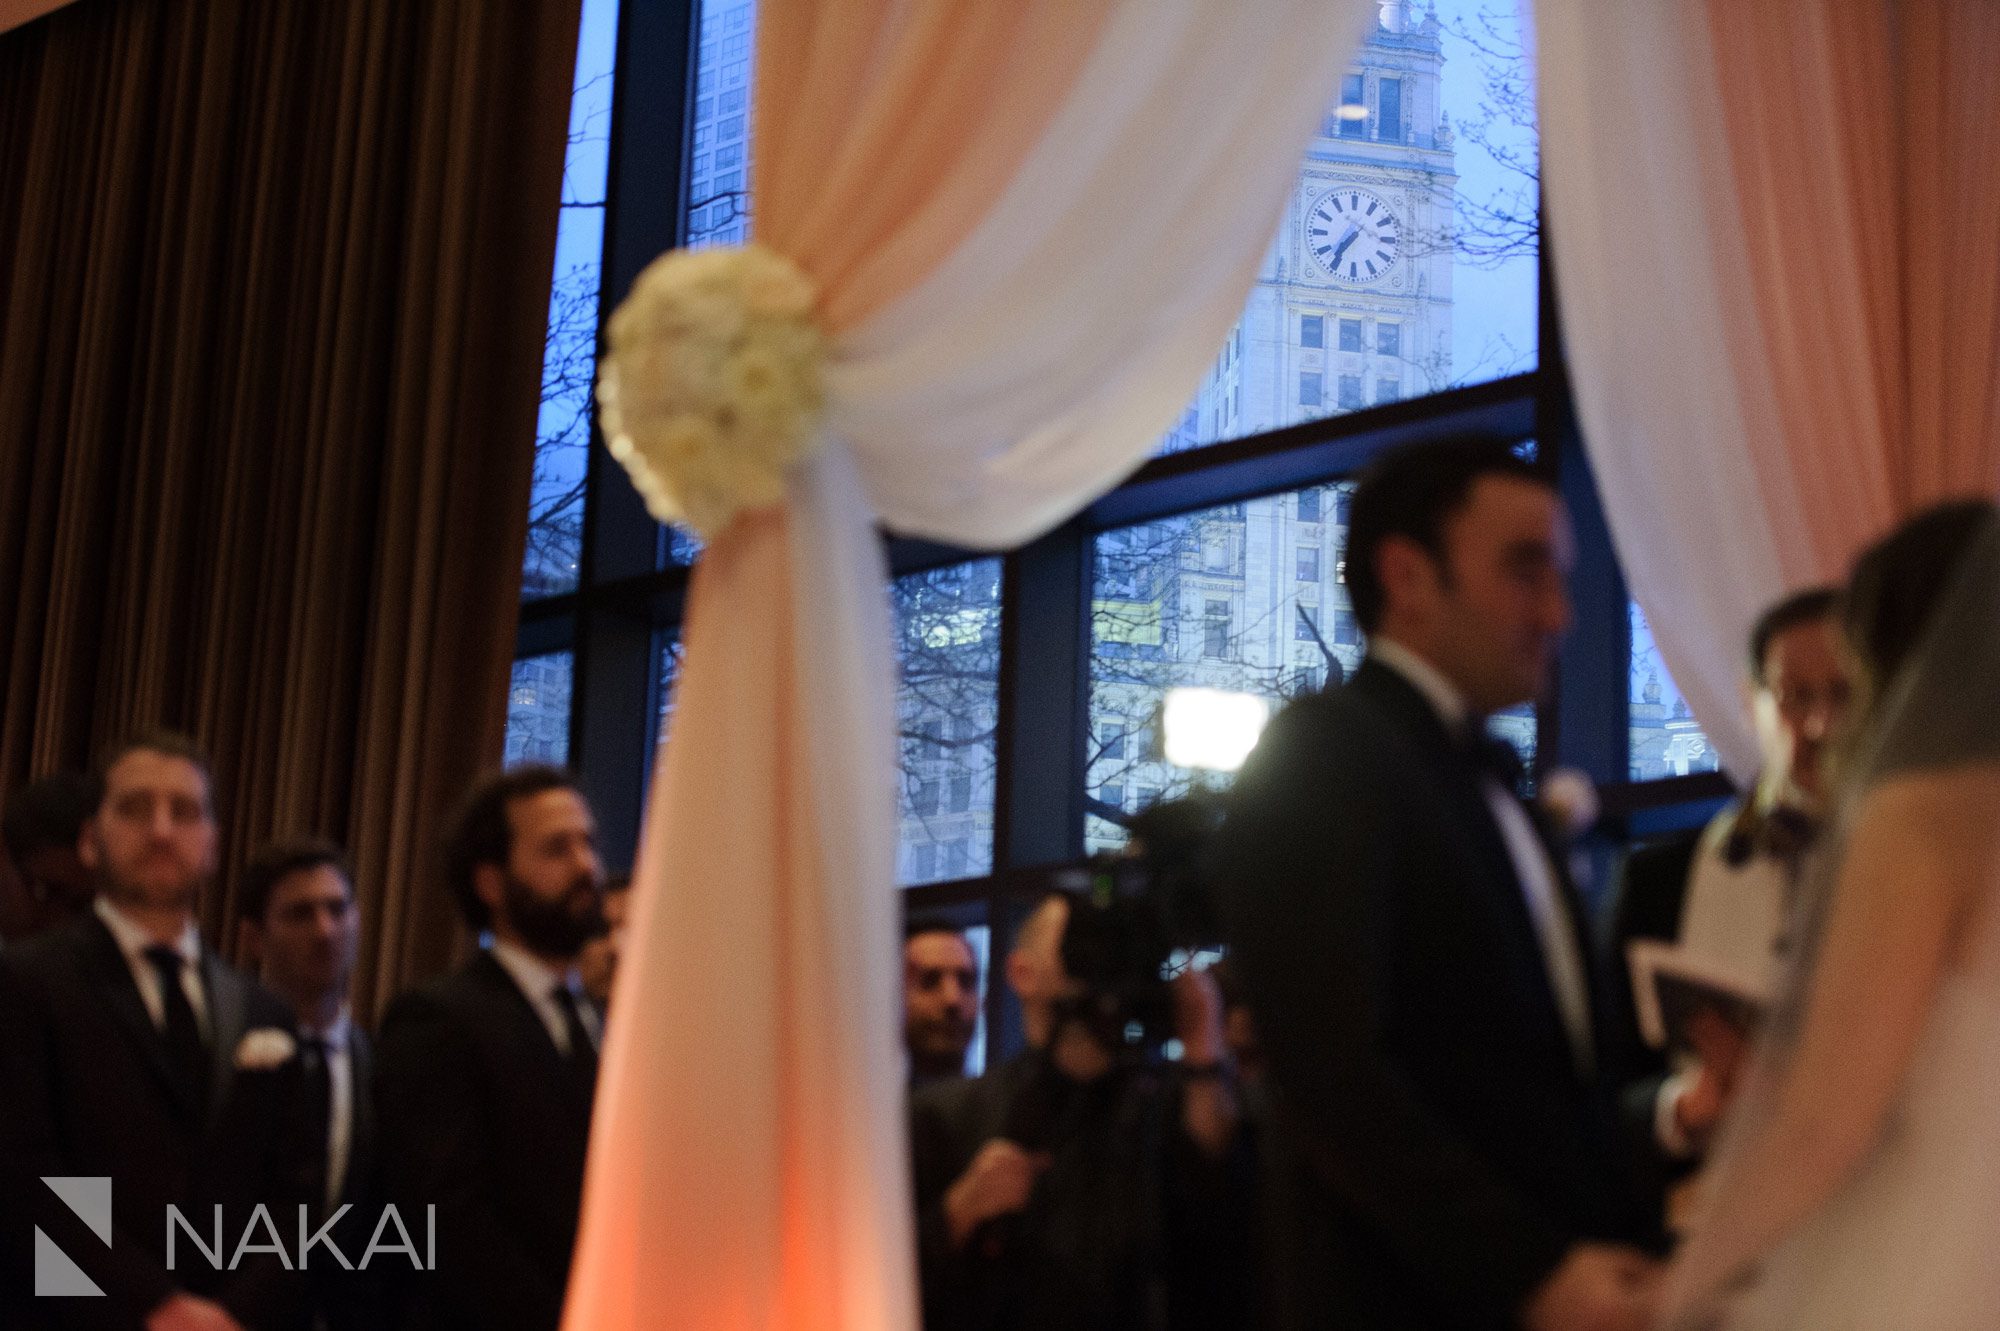 best Chicago jewish wedding photographer hyatt regency ballroom ceremony venue